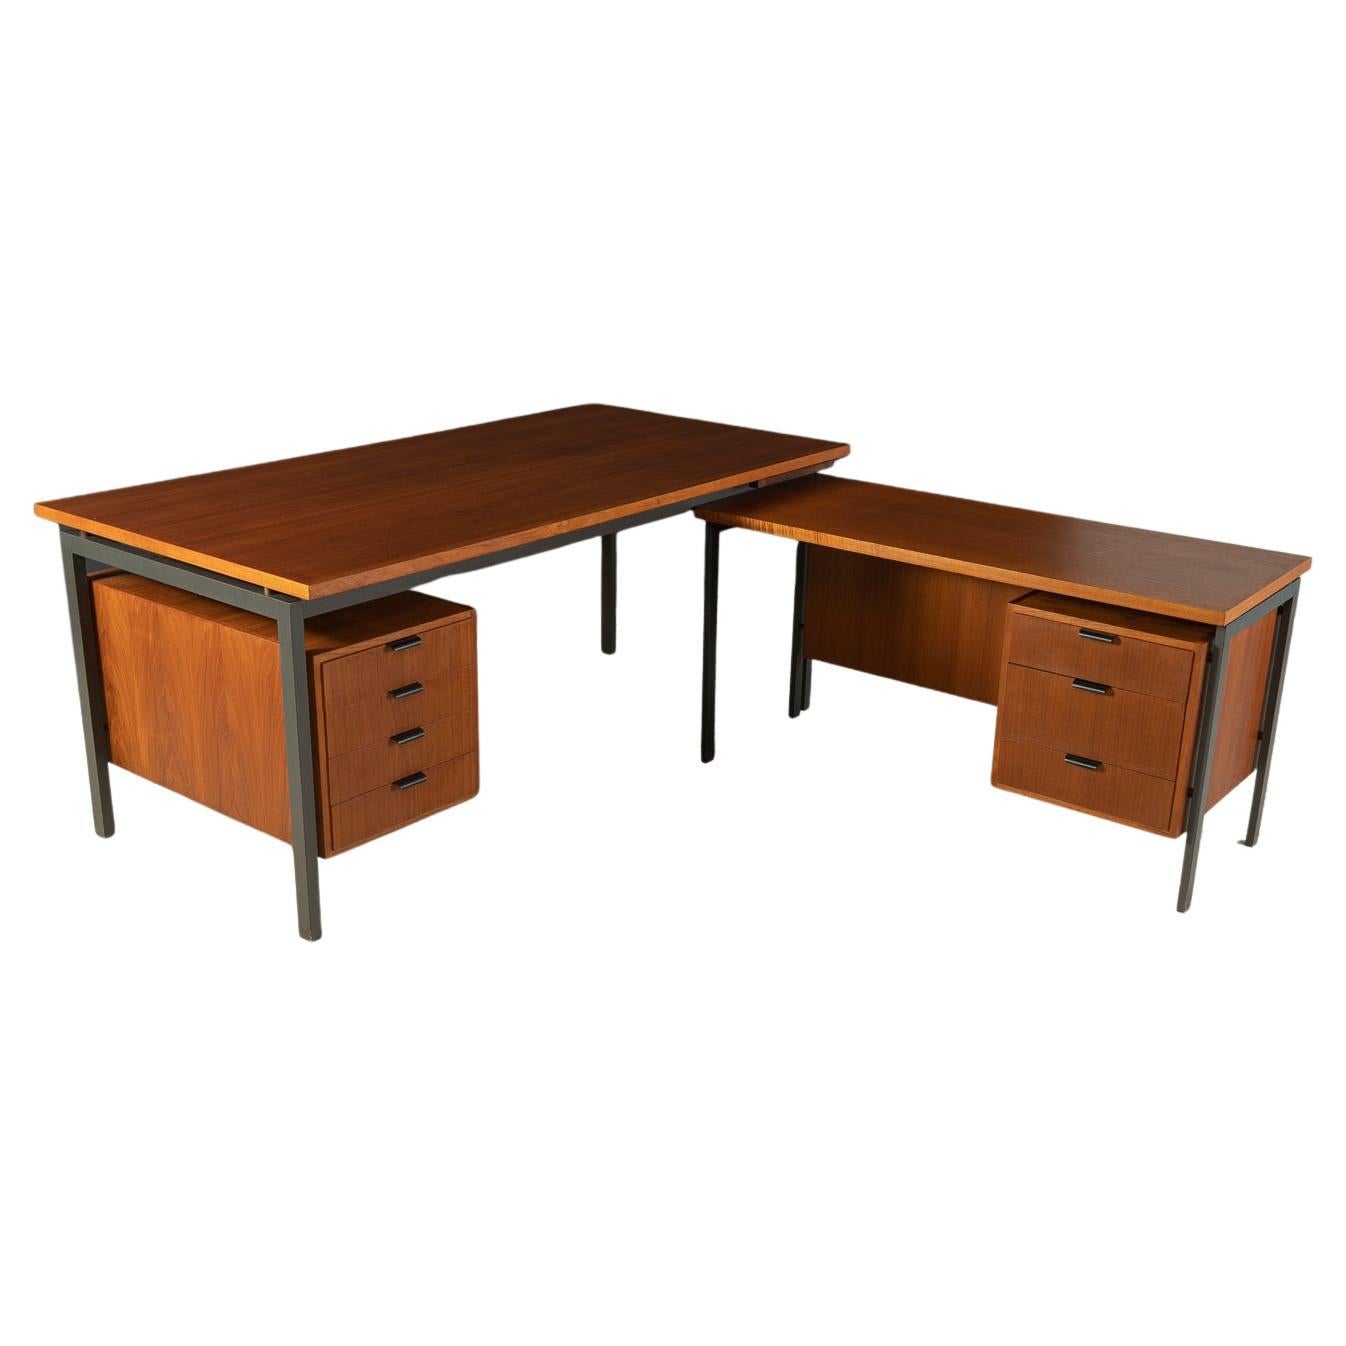 Set of Desks by Herbert Hirche for Holzäpfel 1950s For Sale